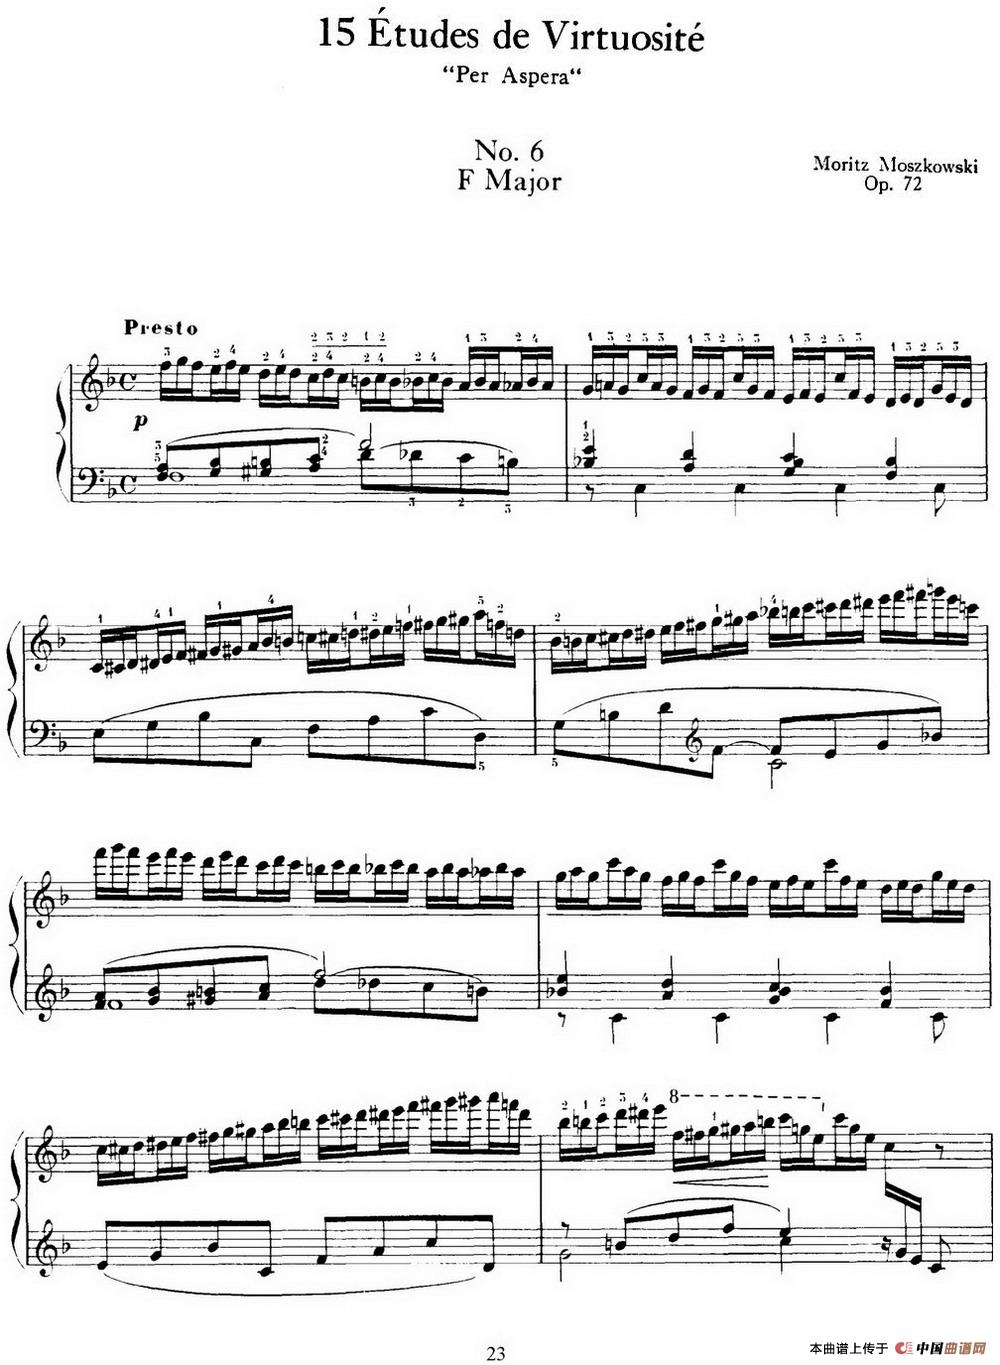 15 Etudes de Virtuosité Op.72 No.6（十五首钢琴练习曲之六）(1)_023=.jpg